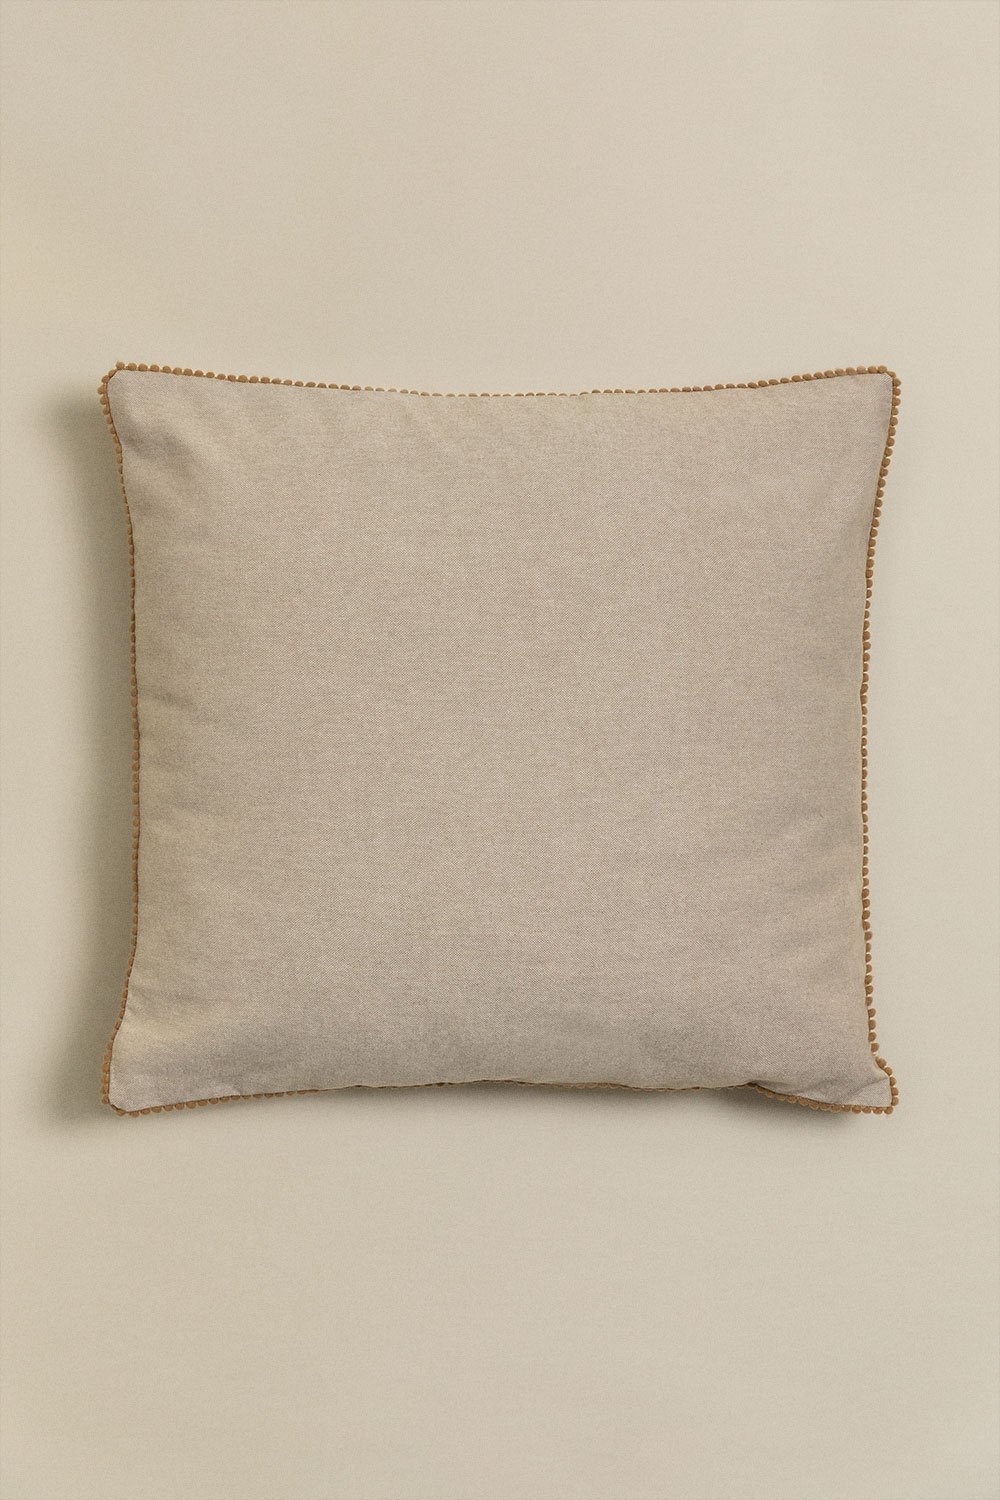 Square Cotton Cushion (45x45 cm) Marmai, gallery image 2